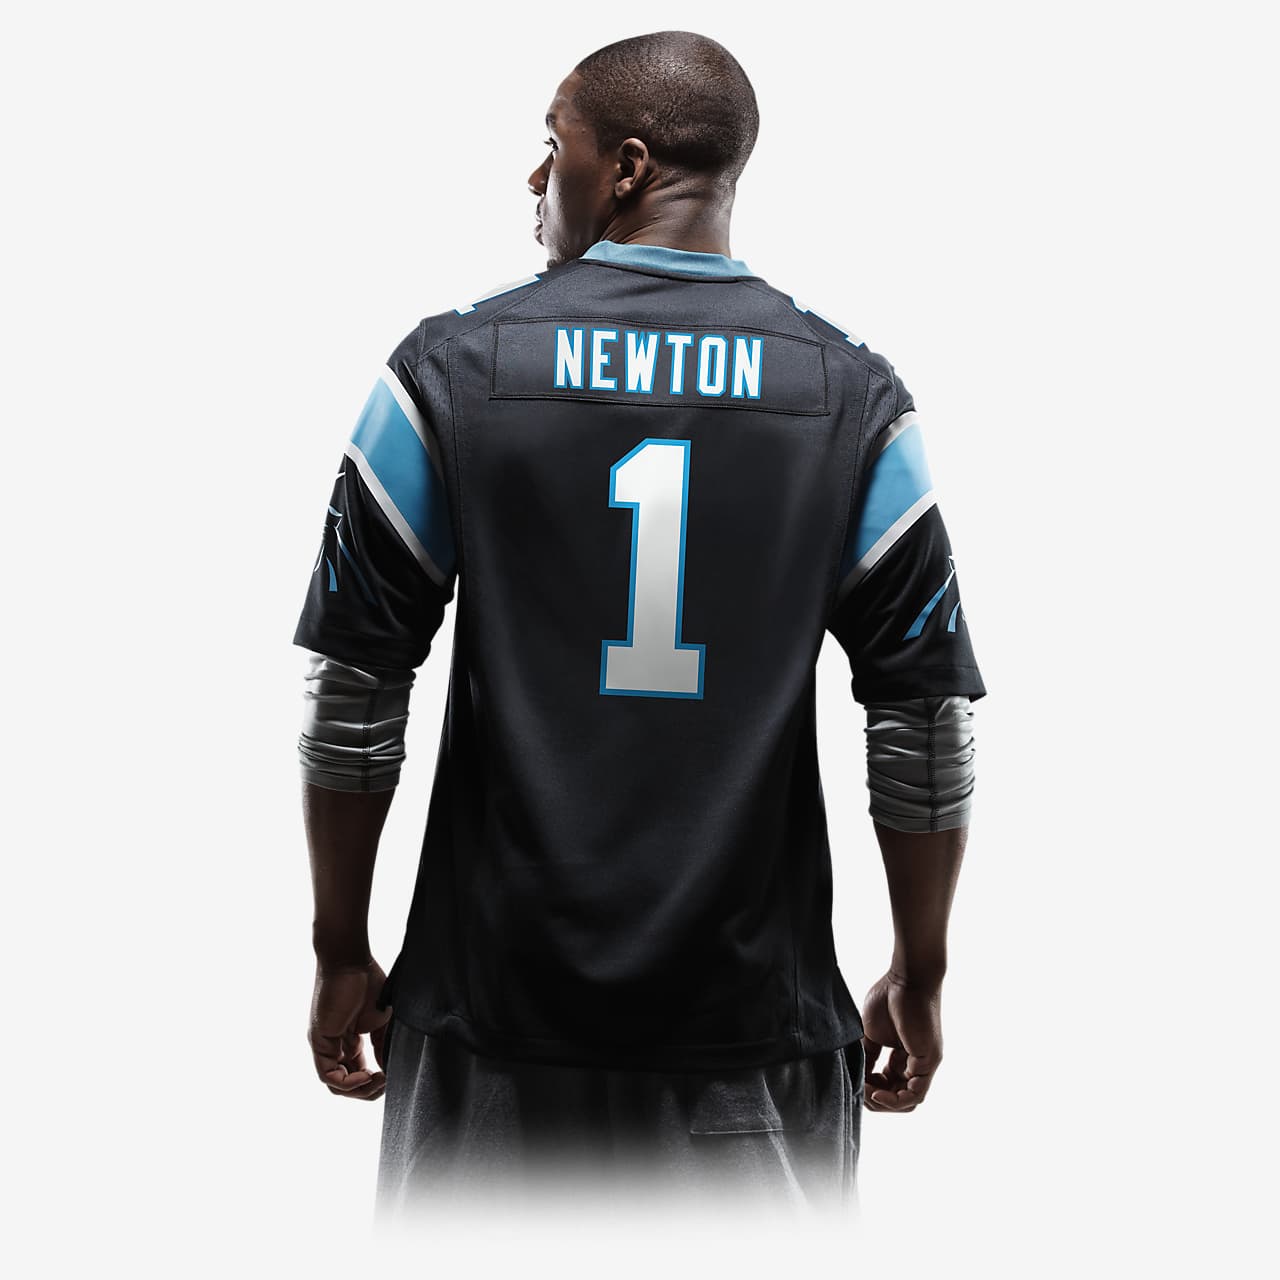 cam newton's jersey